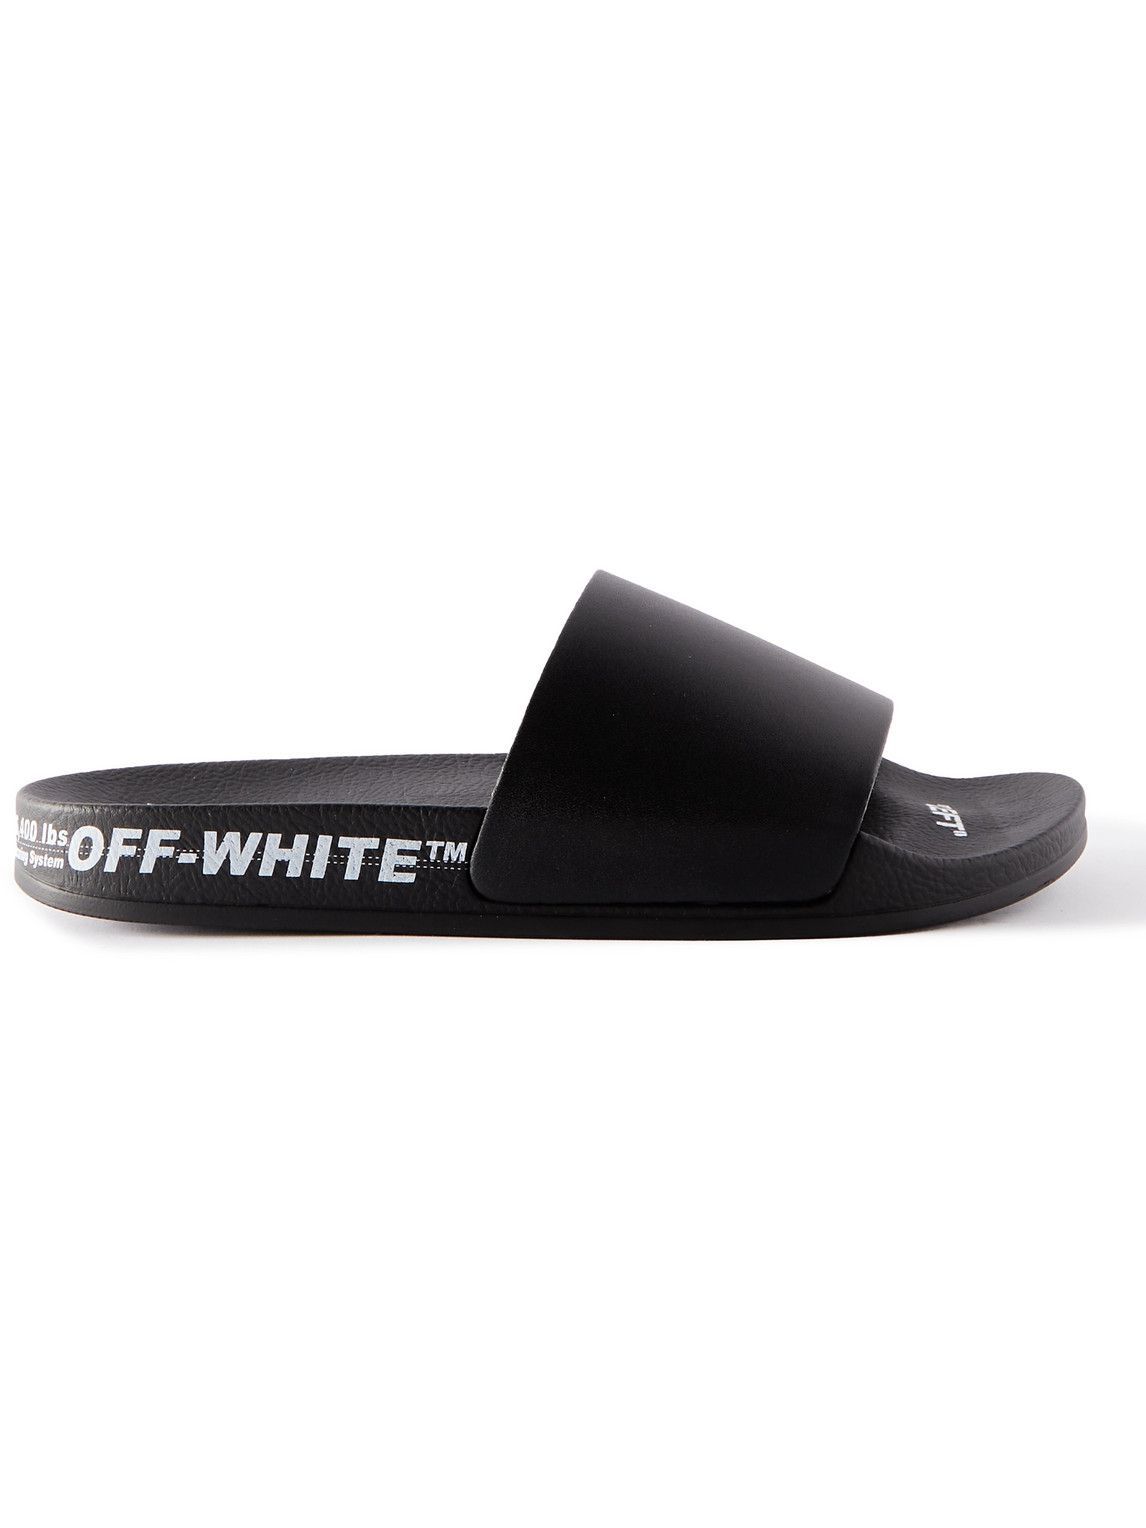 Off-White - Logo-Print Rubber Slides - Black Off-White